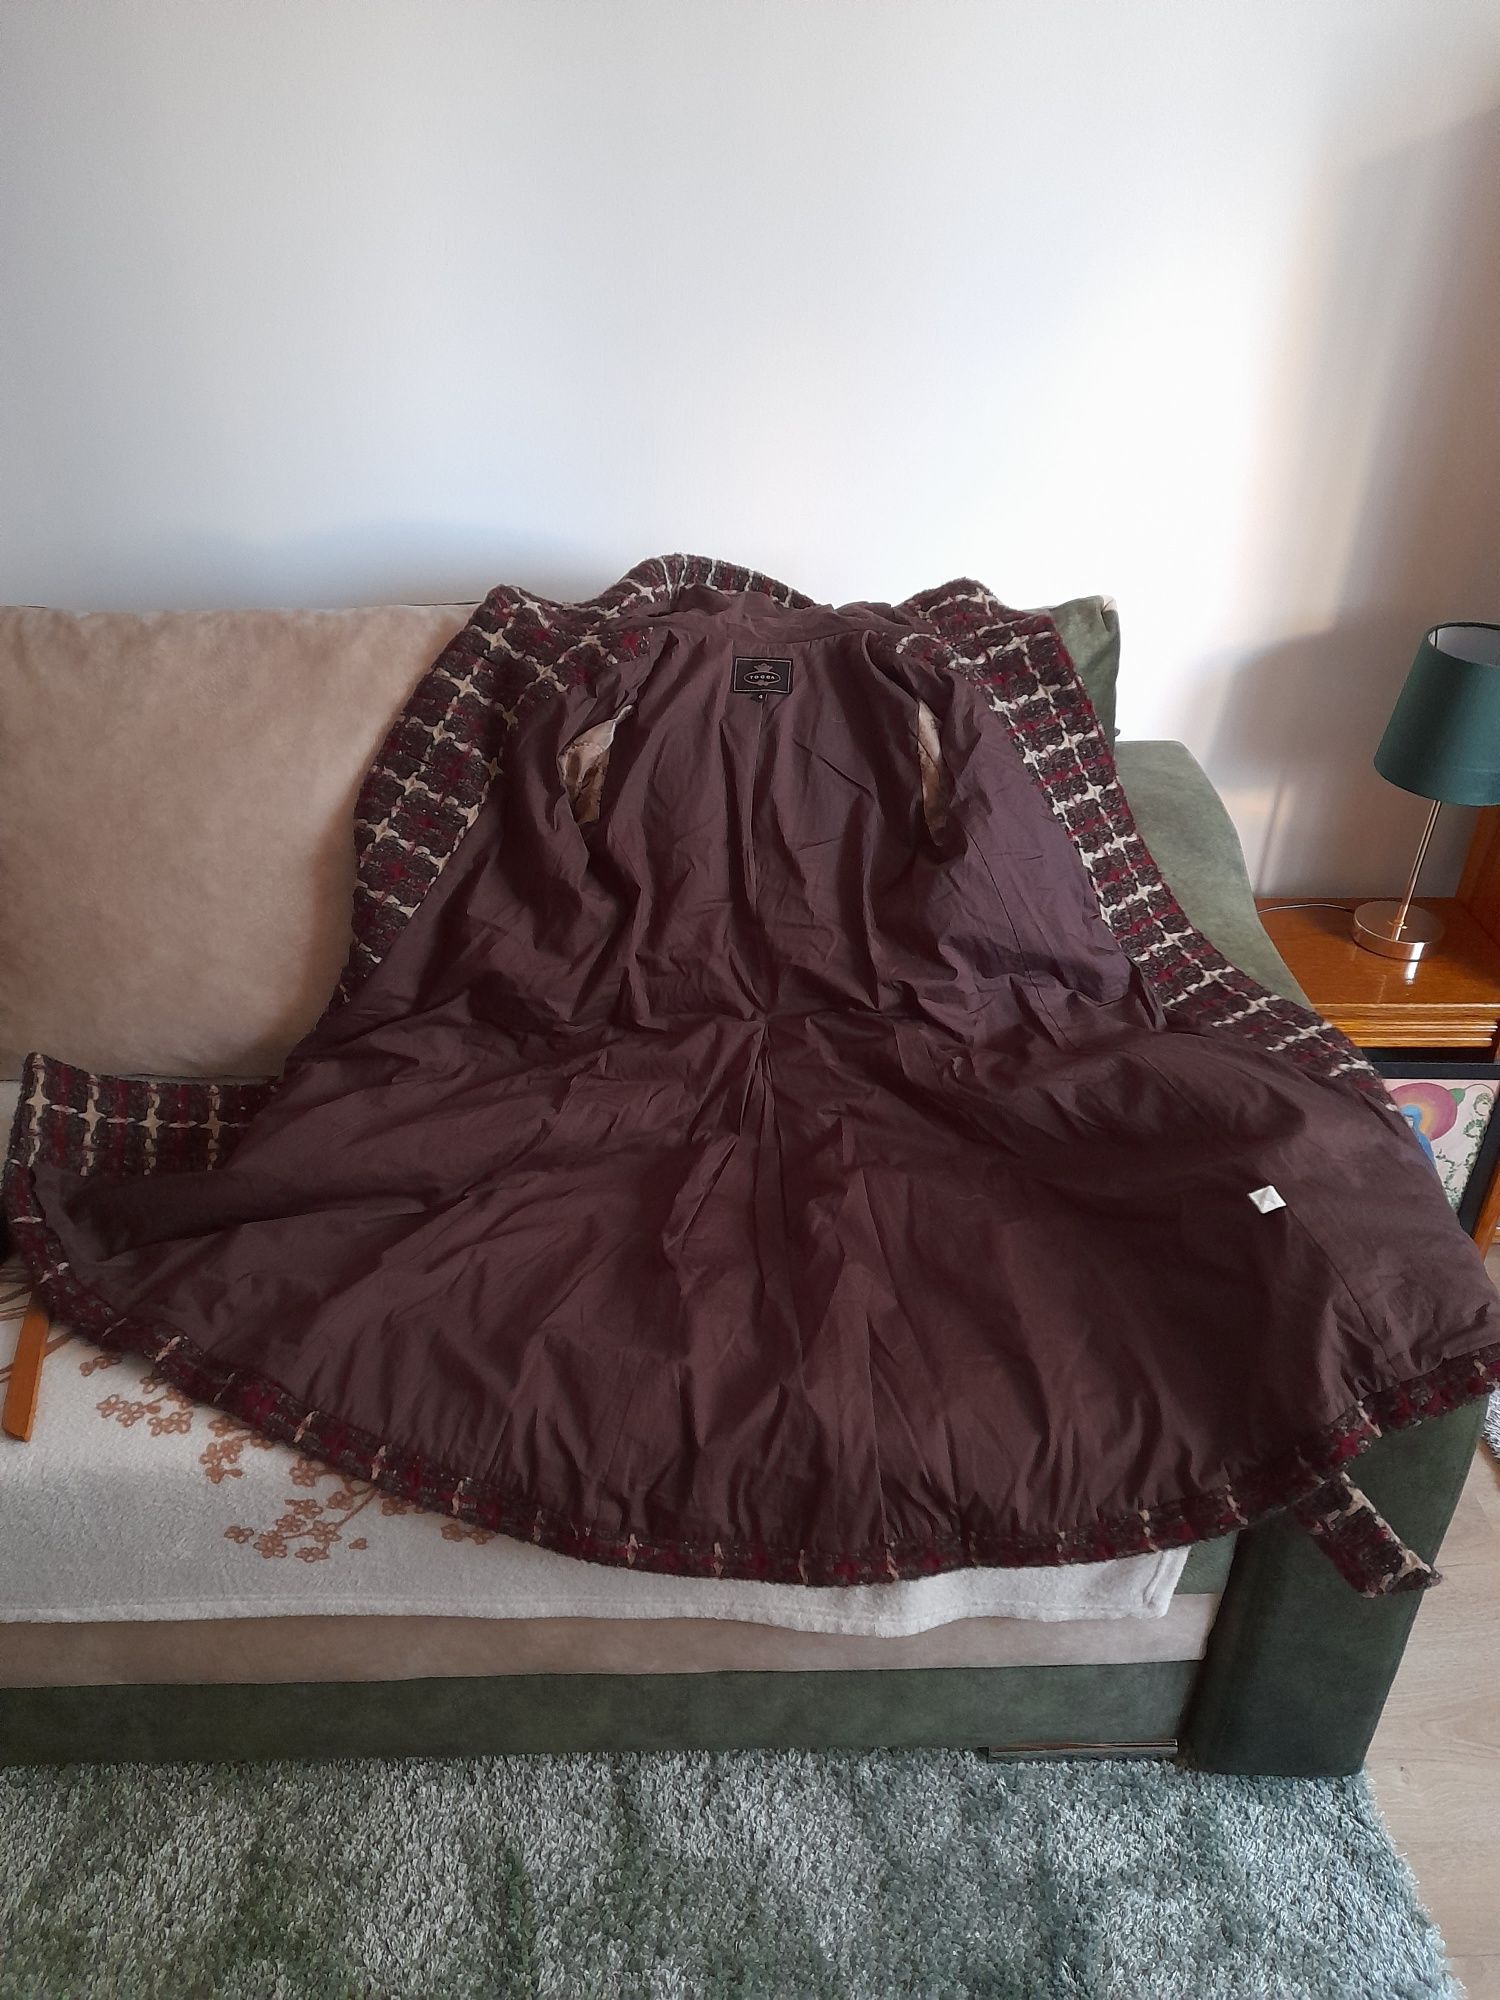 Palton cu gluga - contine lana - marimea 36 S